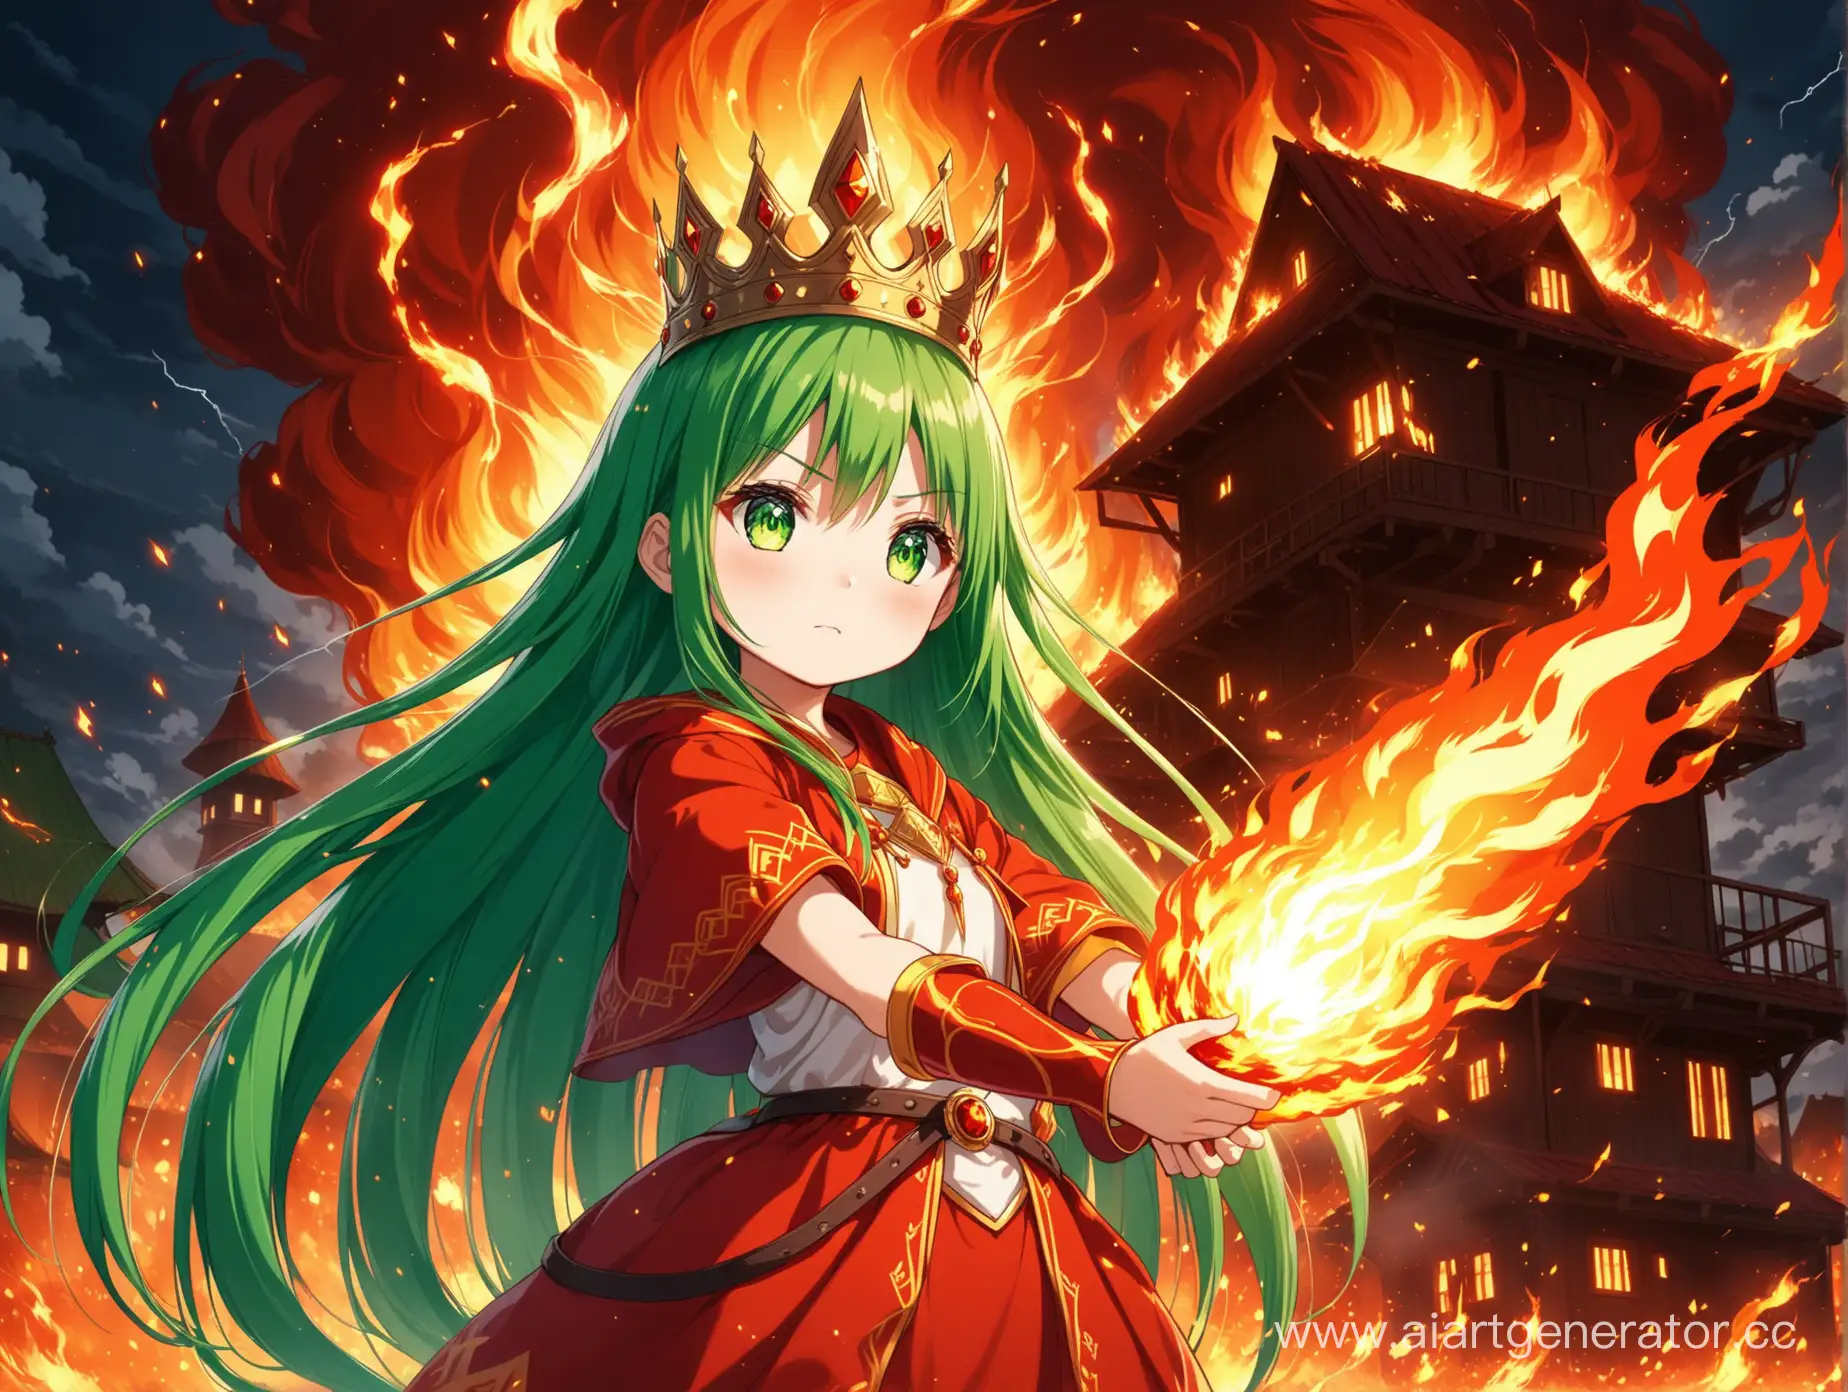 Russian-Fire-Goddess-Anime-Girl-Saving-House-with-Fiery-Magic